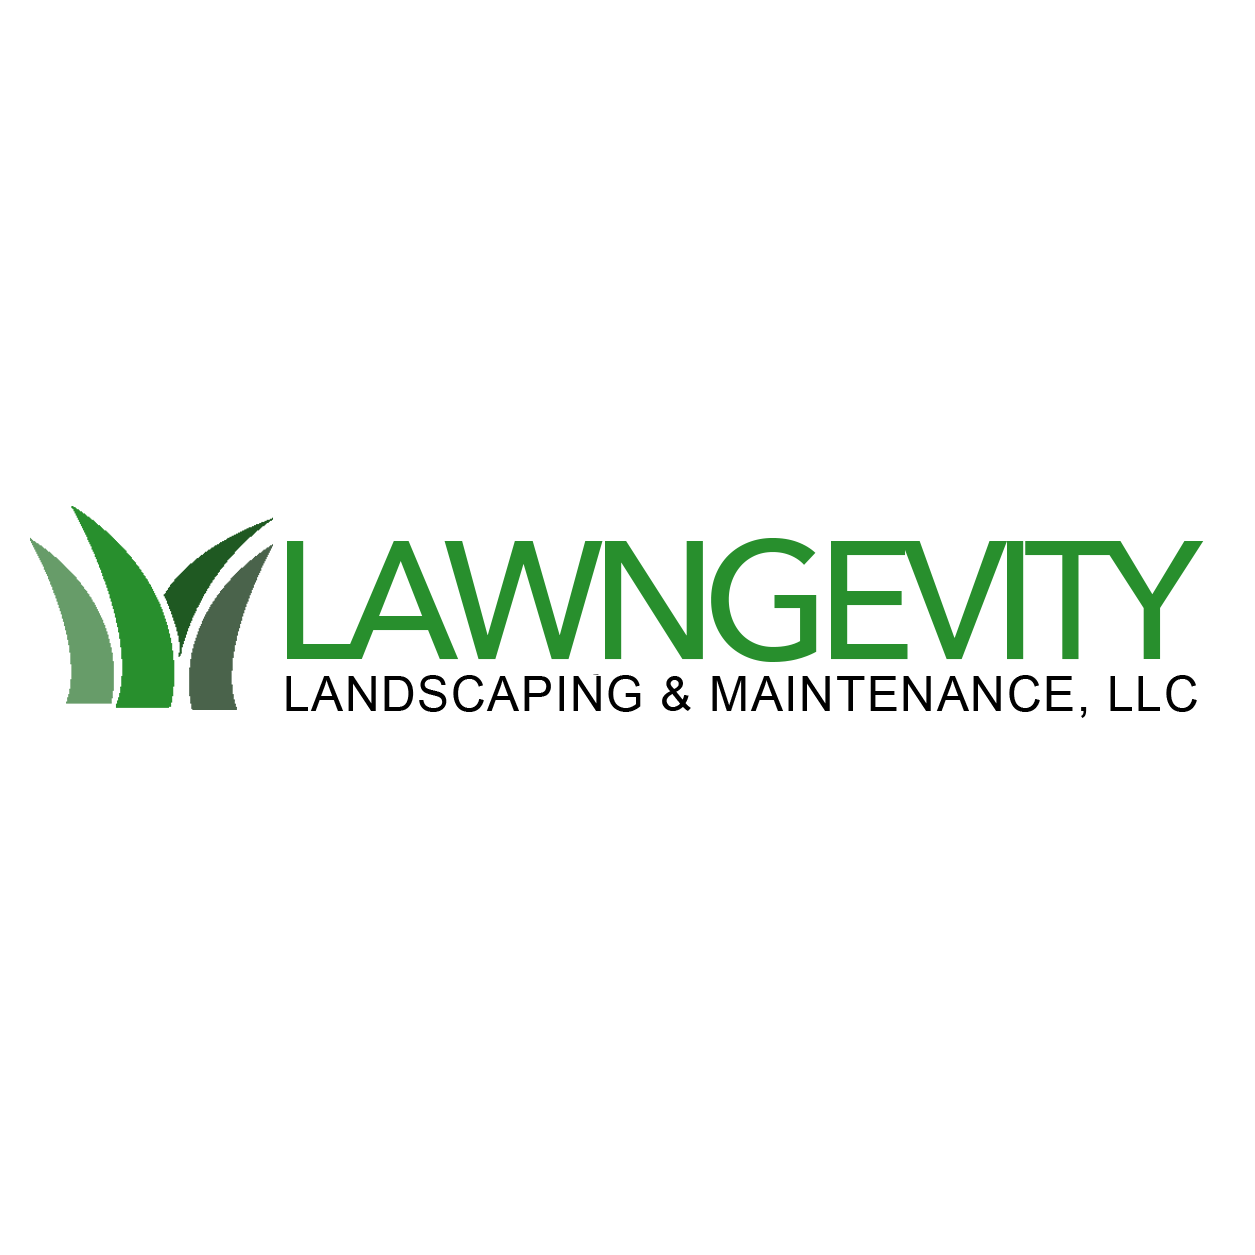 Lawngevity Landscaping & Maintenance, LLC